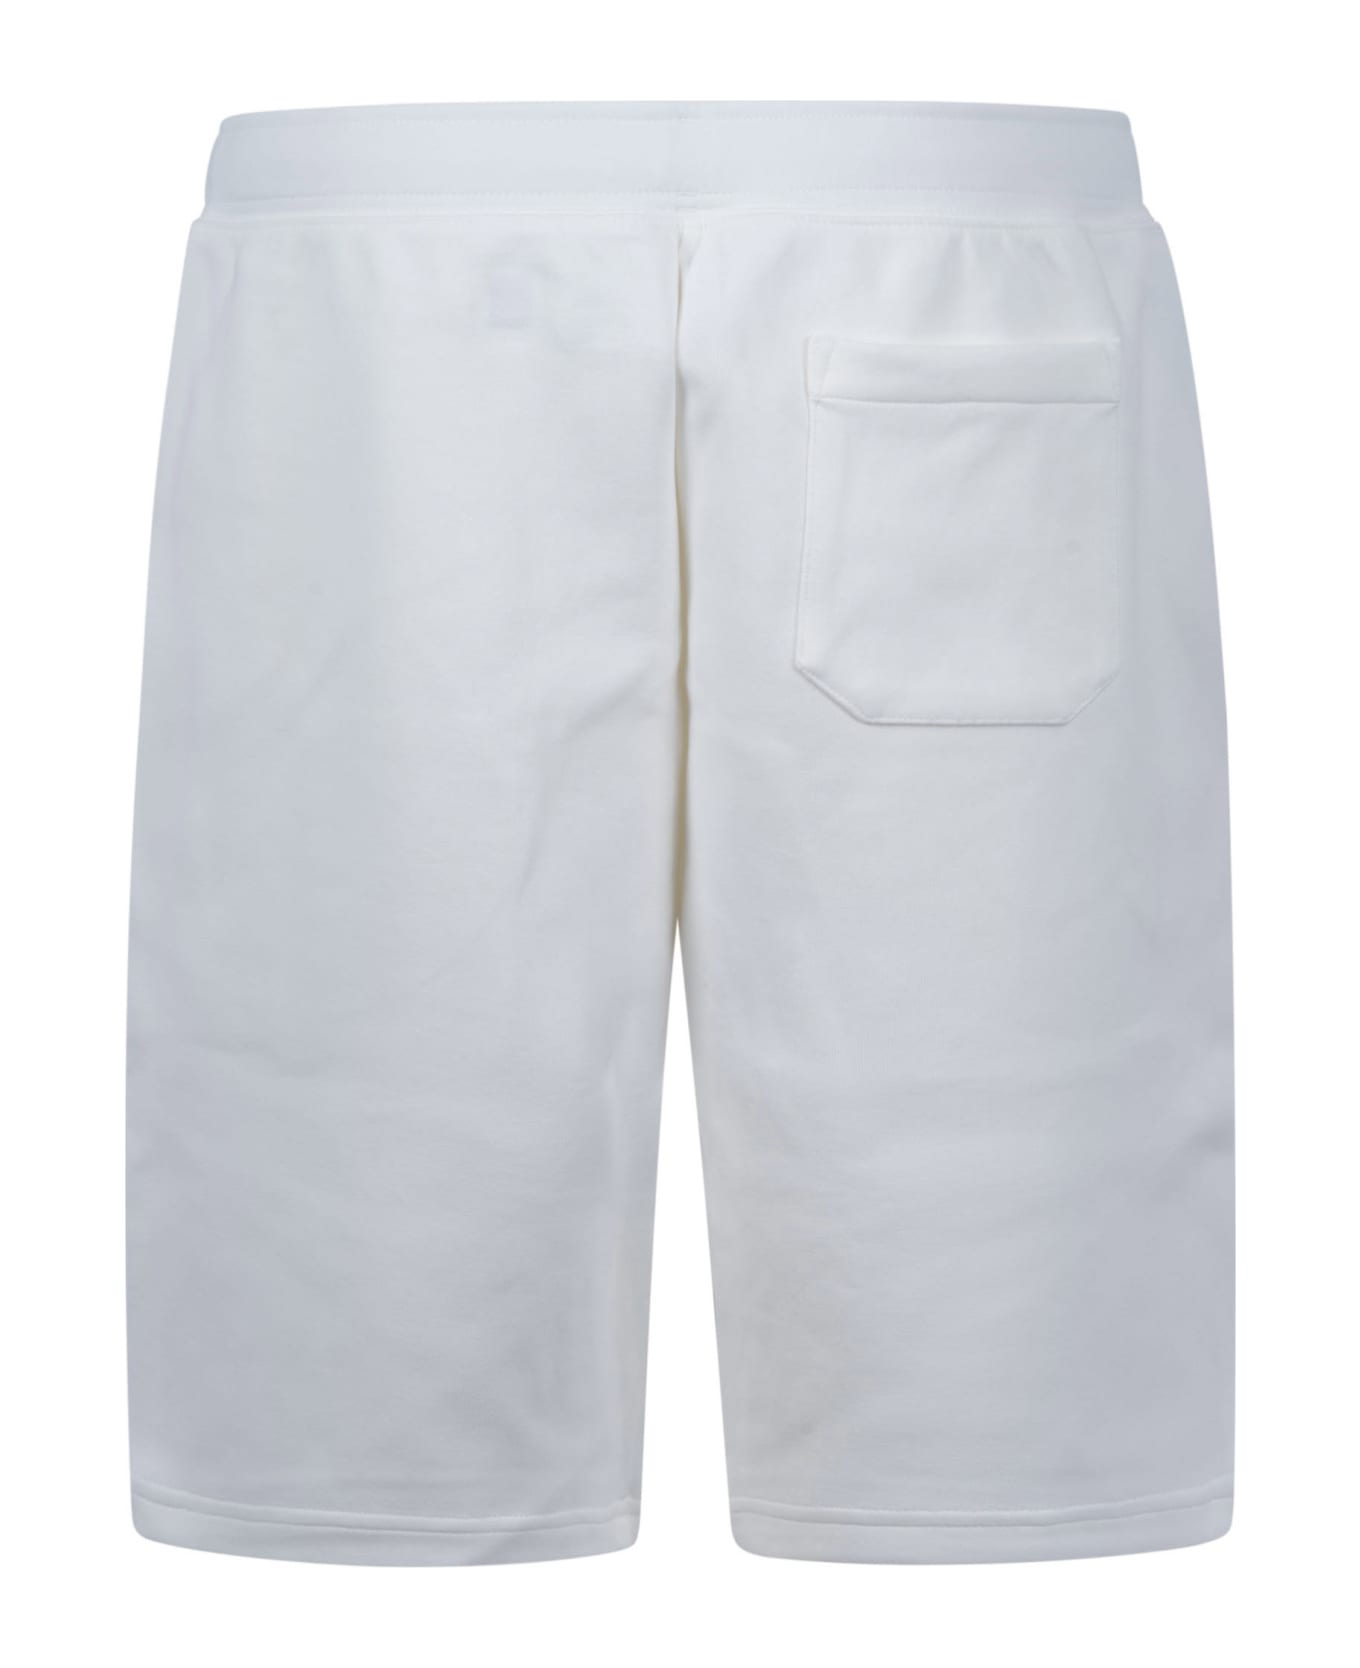 Ralph Lauren Drawstringed Shorts - White